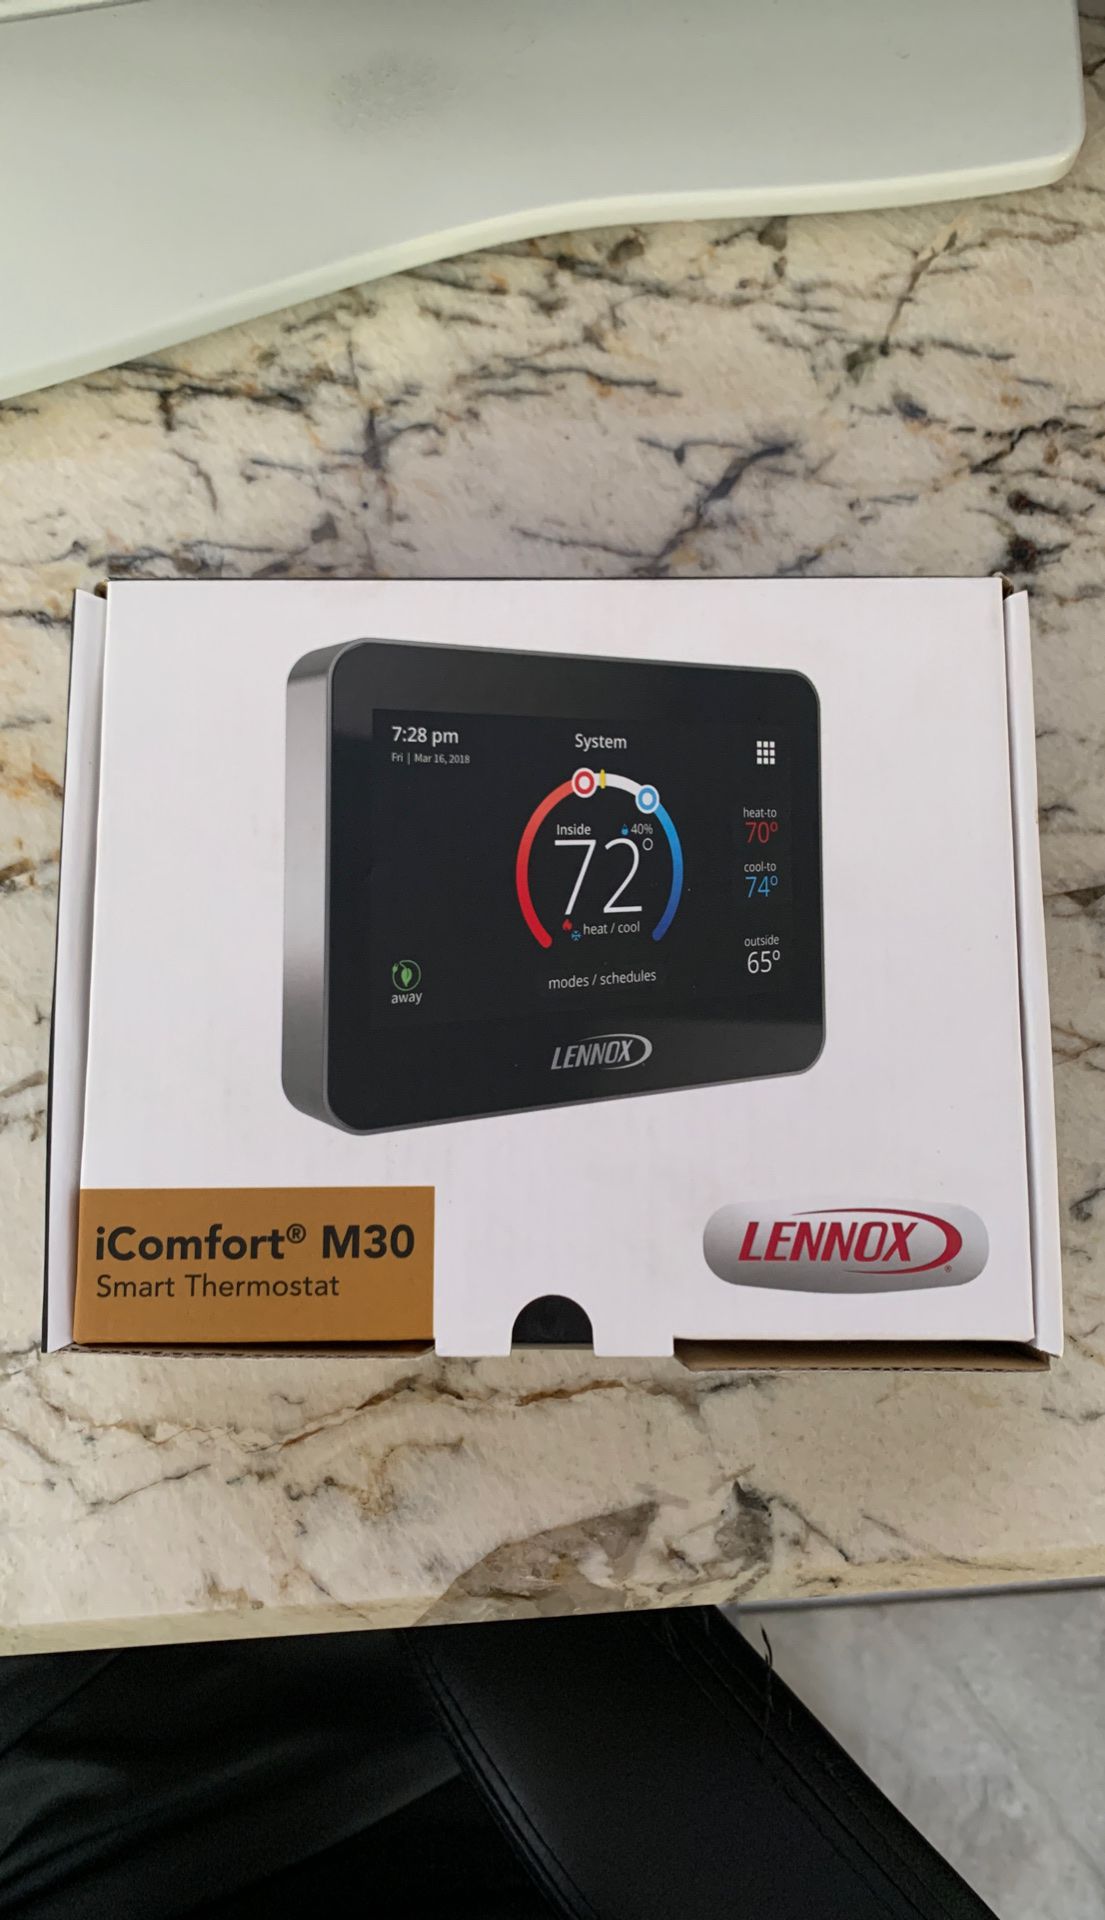 Lennox iComfort M30 Smart Thermostat